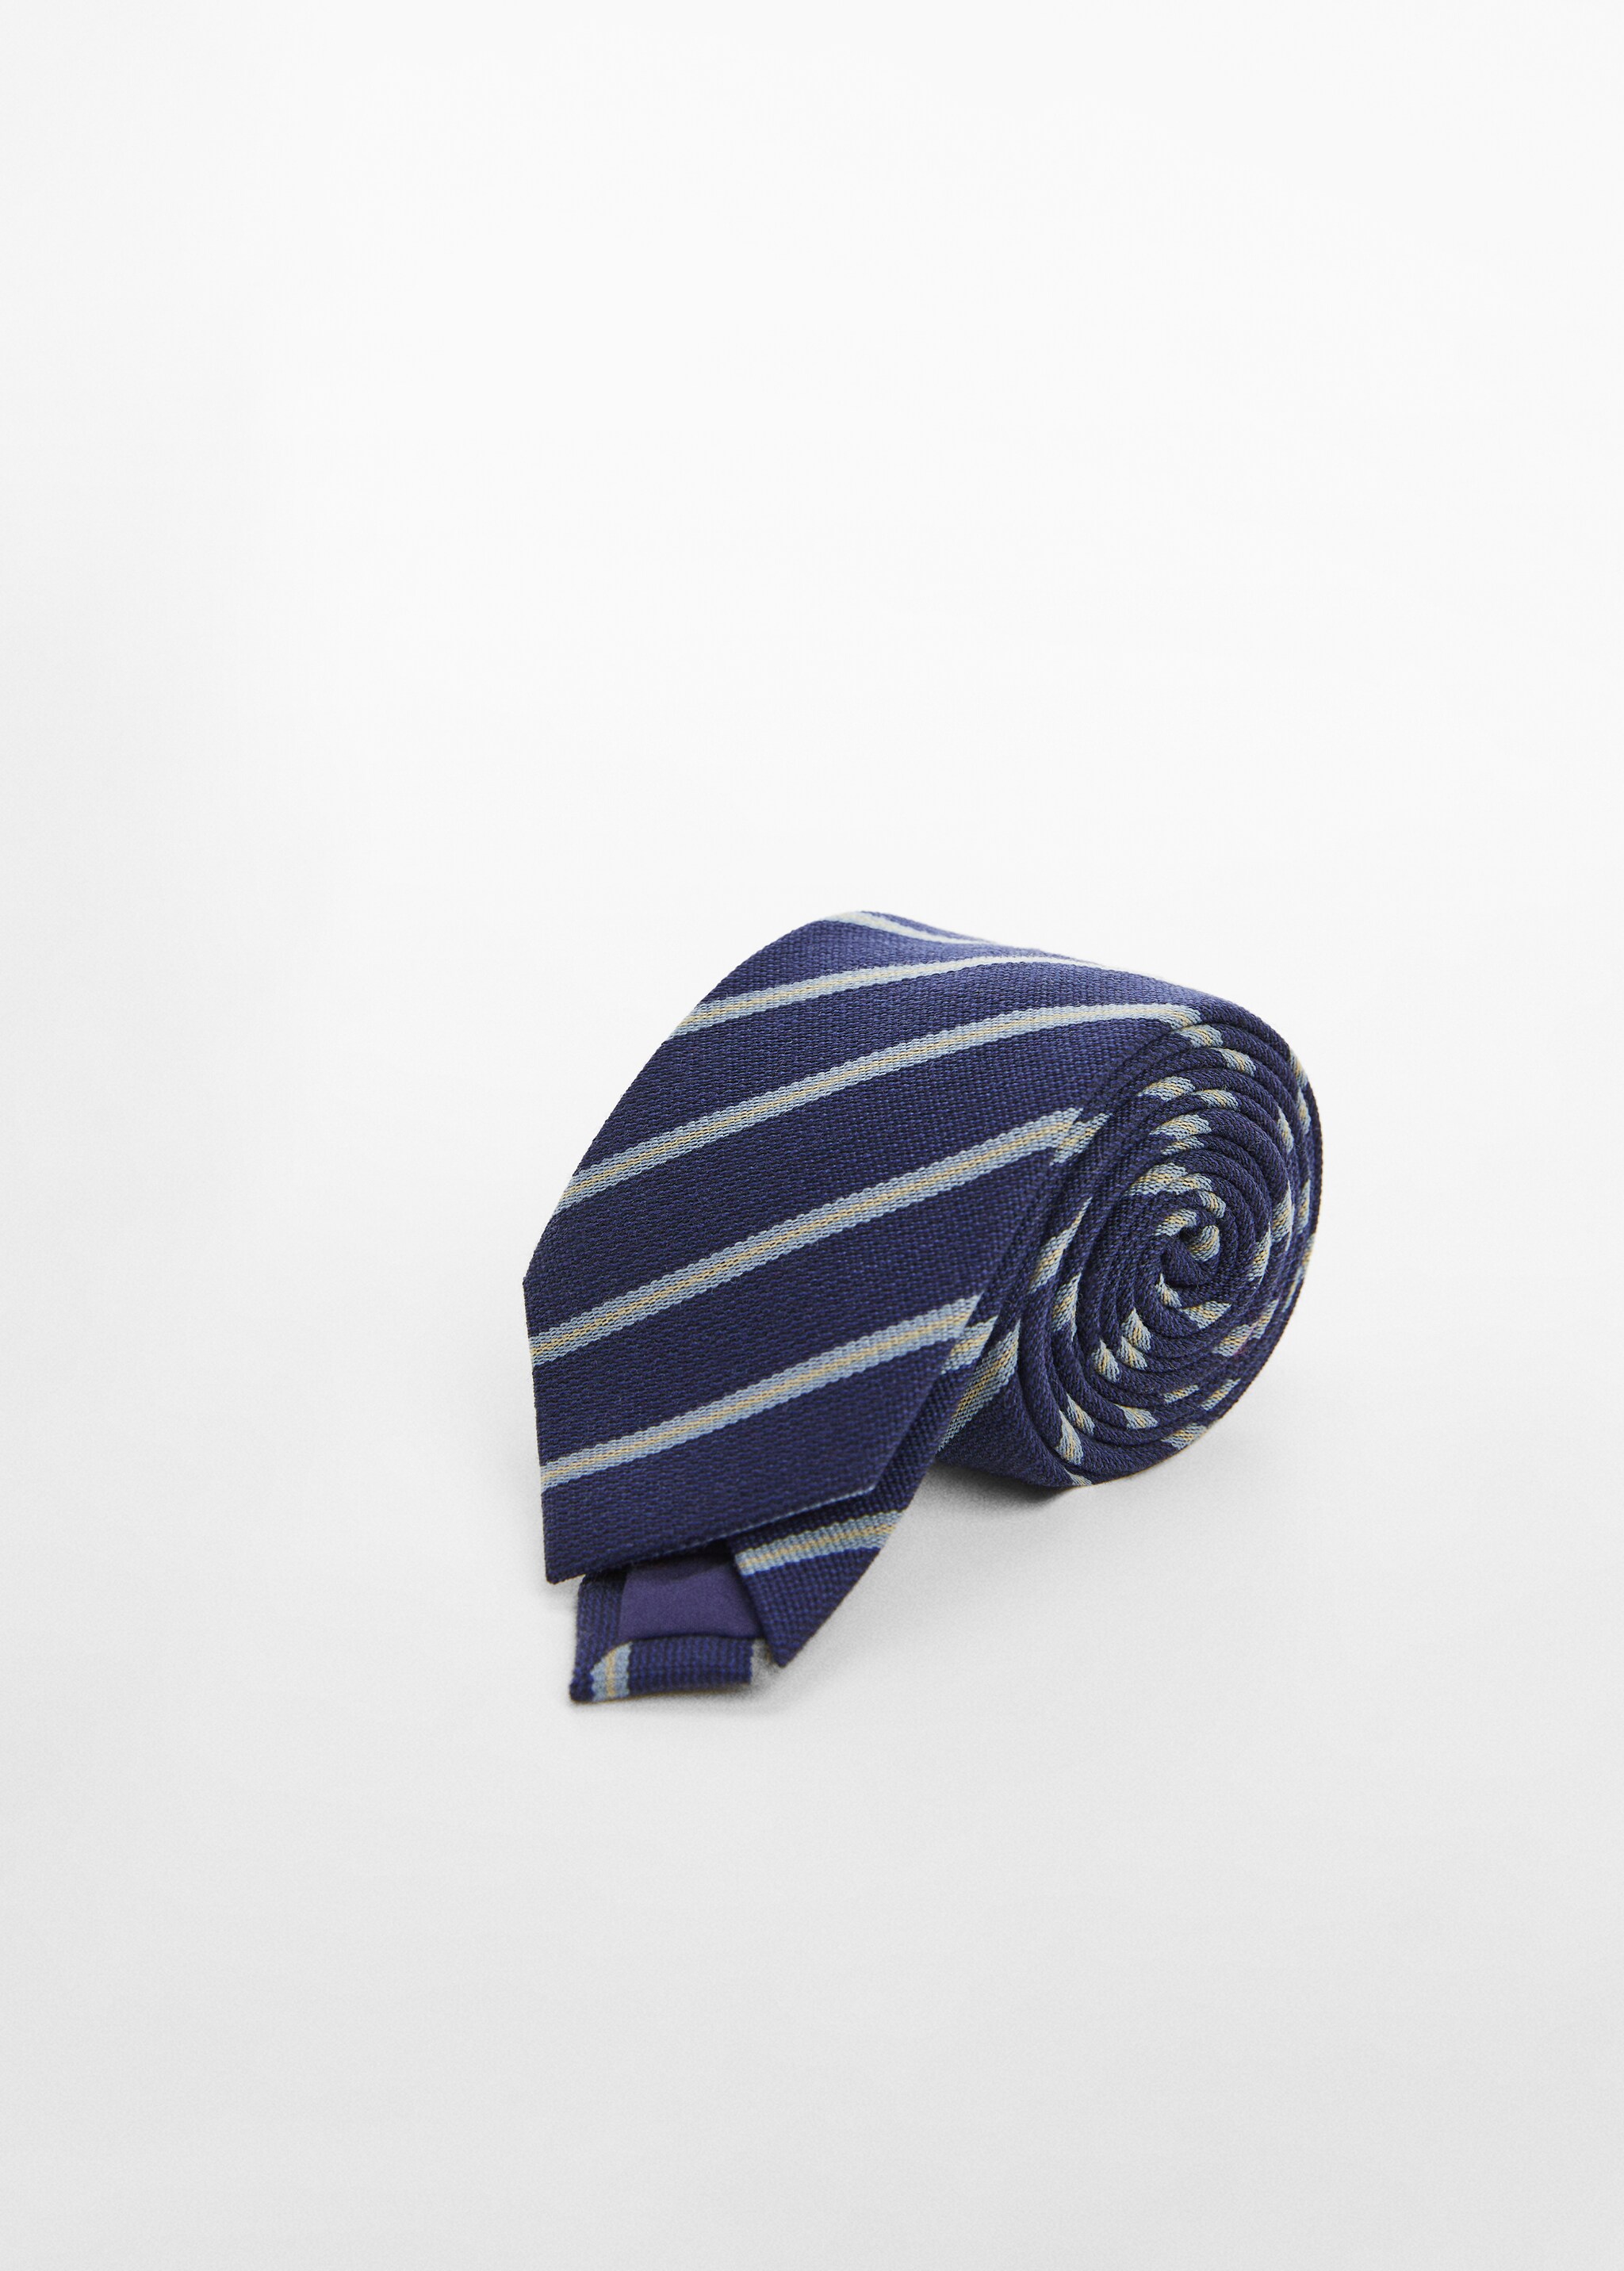 Striped wool blend tie - Medium plane